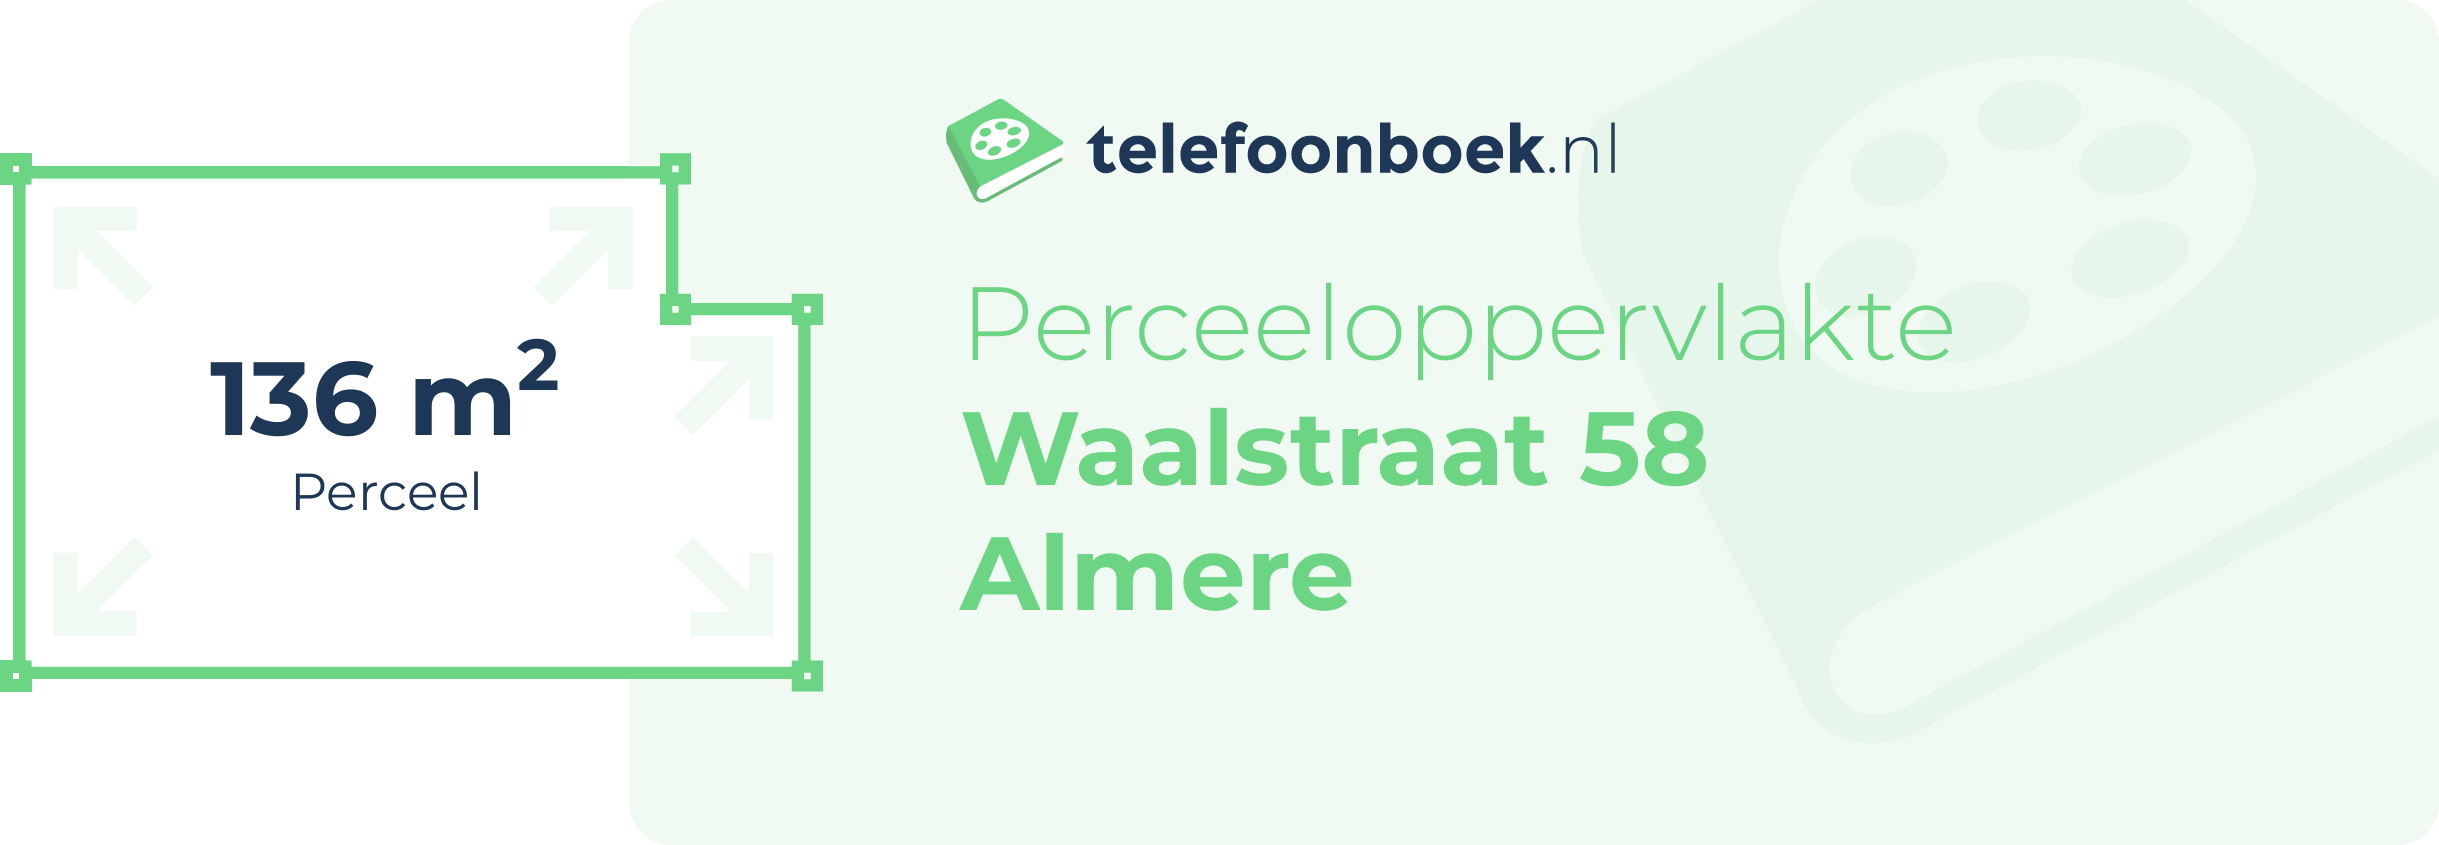 Perceeloppervlakte Waalstraat 58 Almere